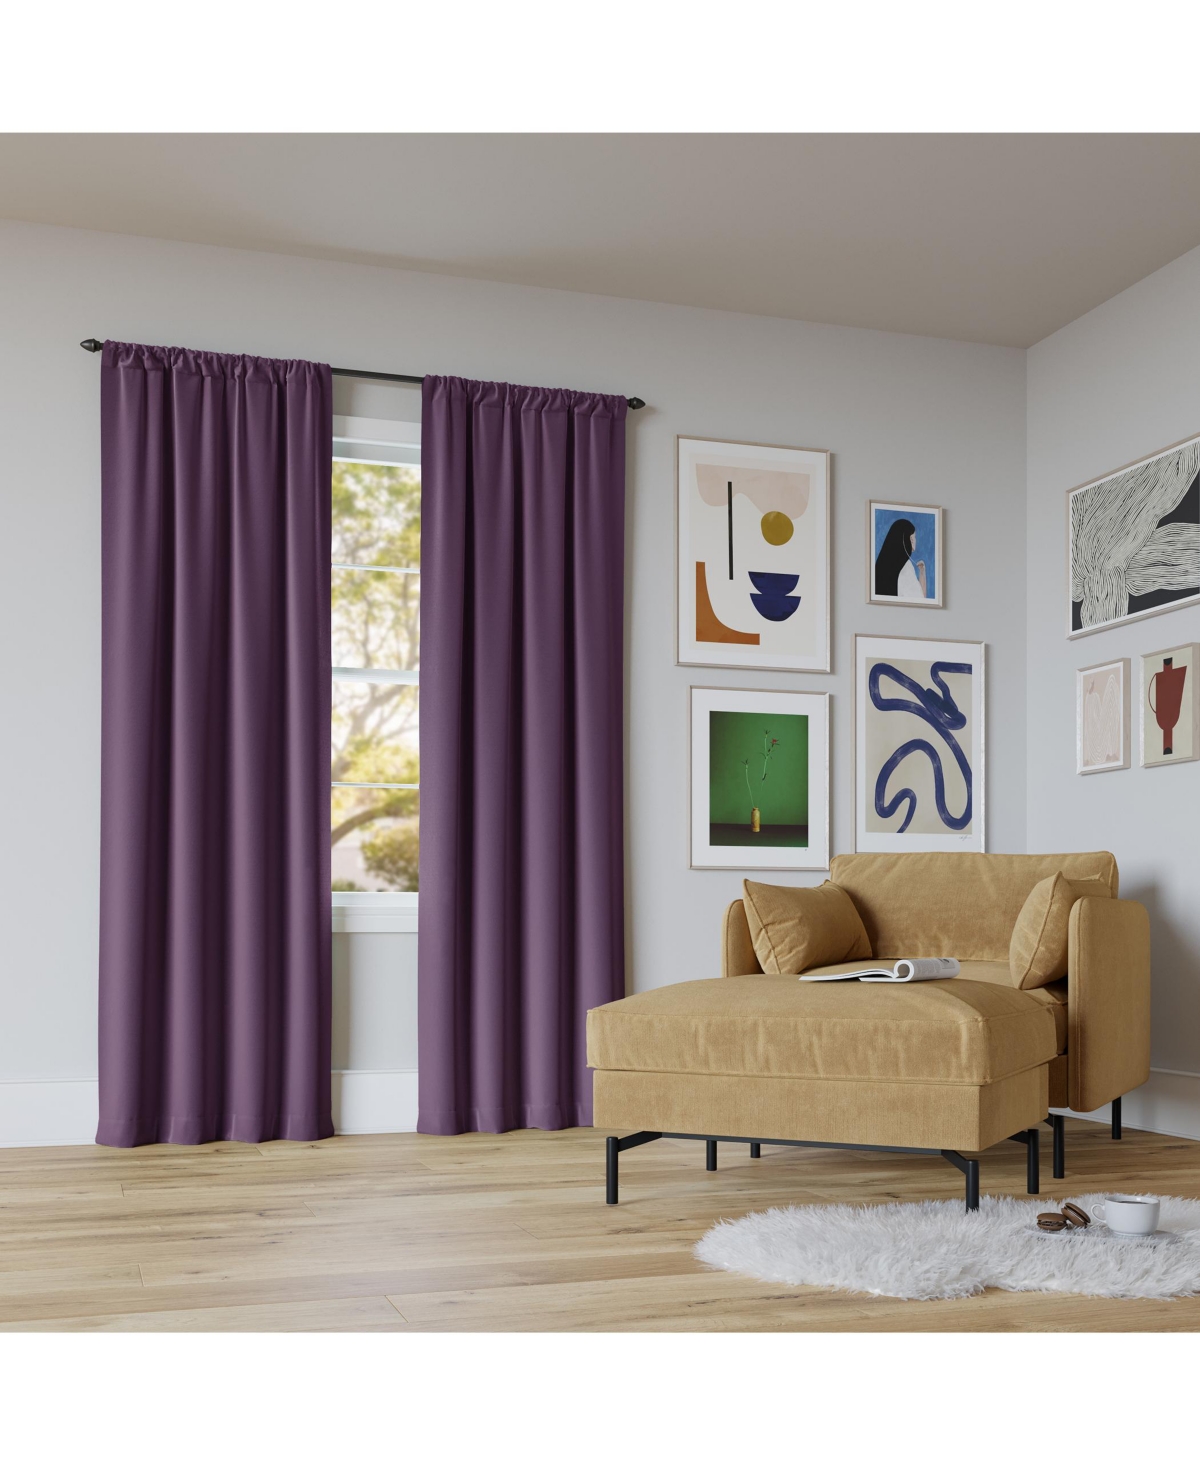 Rianna Theater Grade Extreme 100% Blackout Rod Pocket Curtain Panel - Amethyst purple